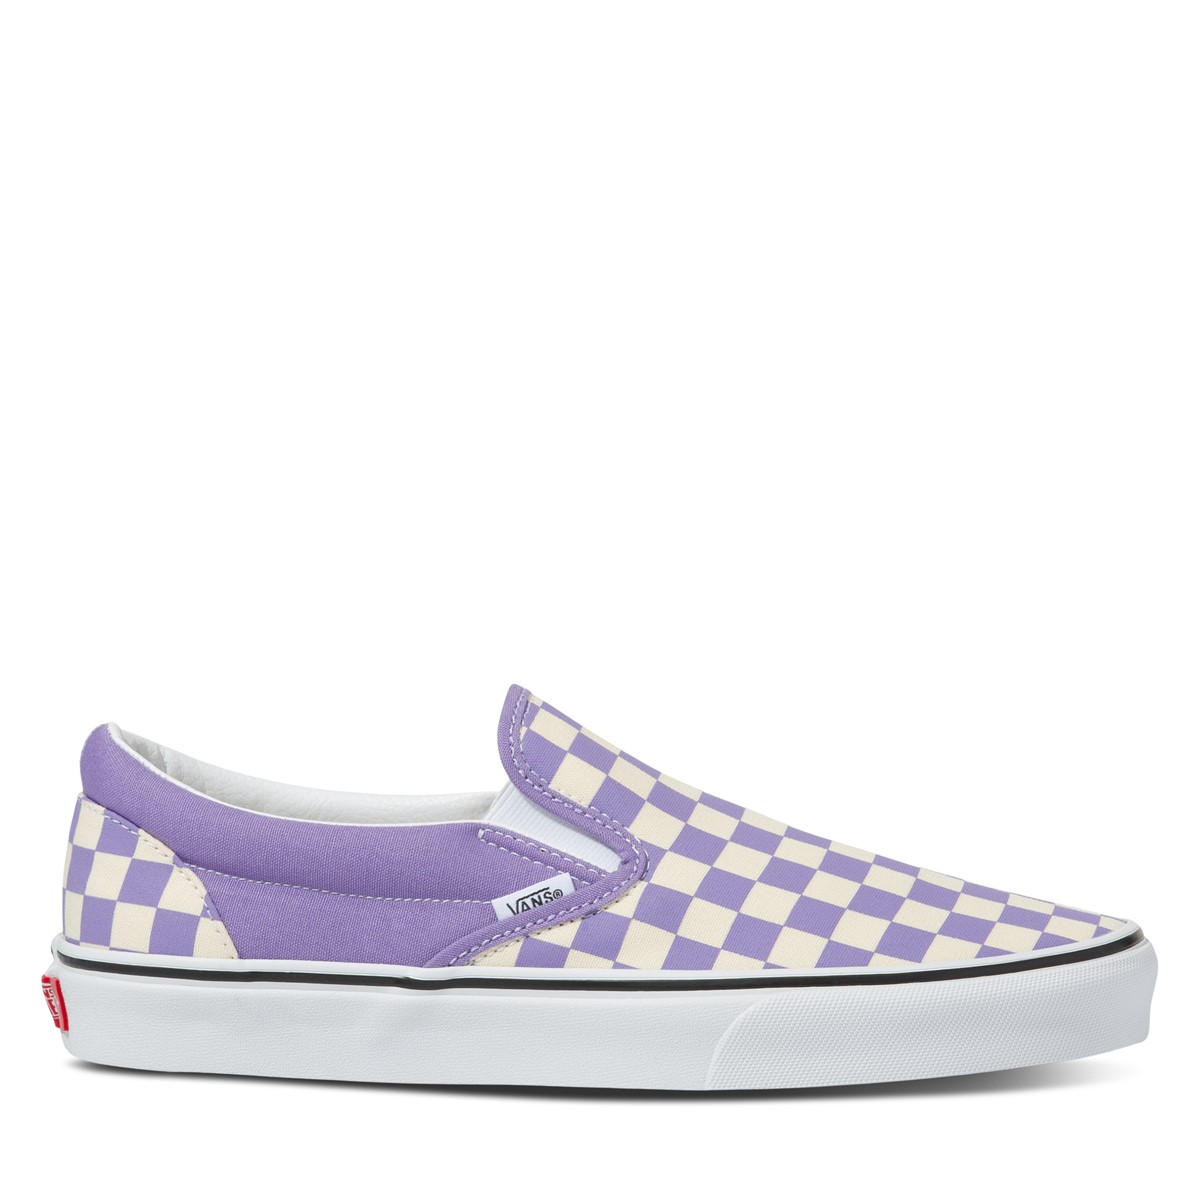 Checkerboard Slip-On Sneakers in Violet/White